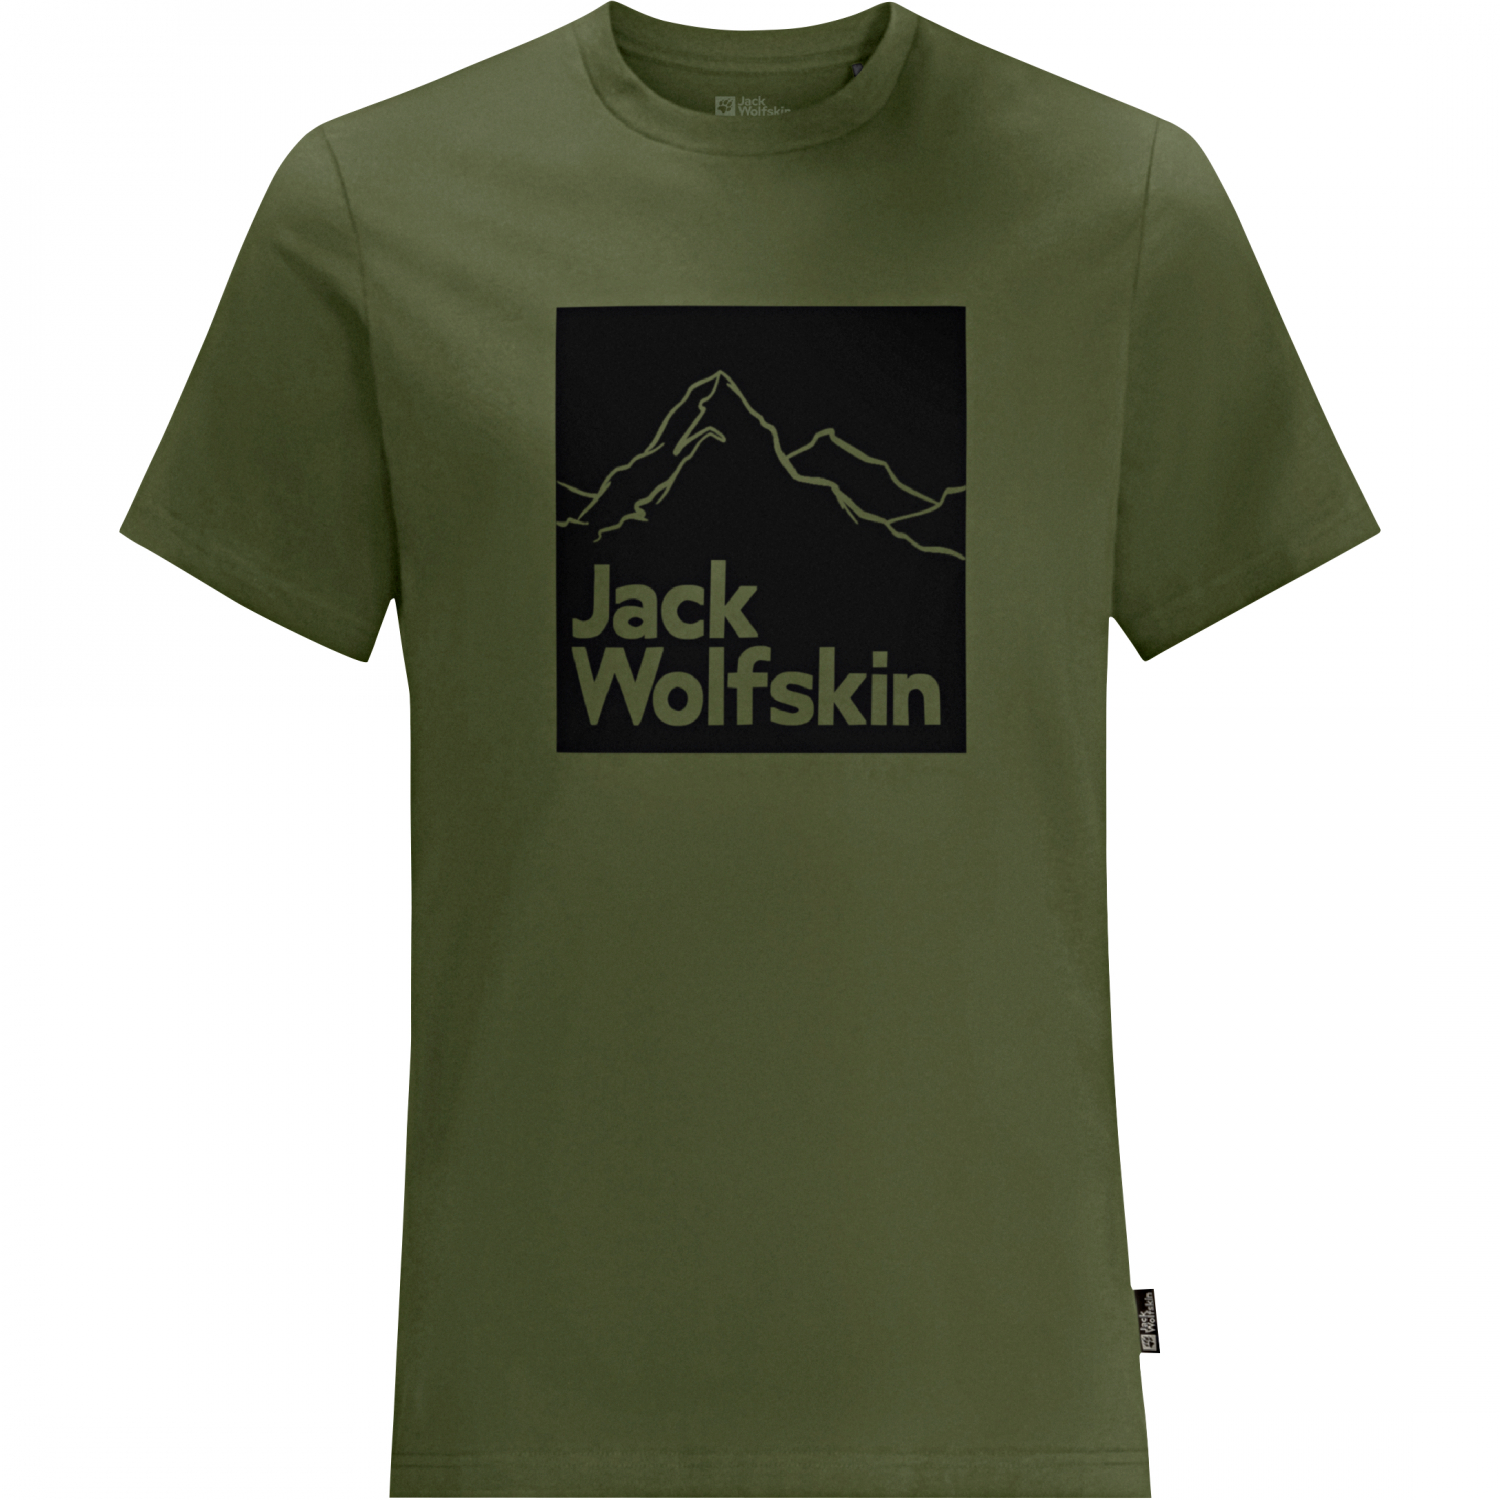 Jack Wolfskin Herren Shirt Brand T M günstig kaufen - Askari Jagd-Shop